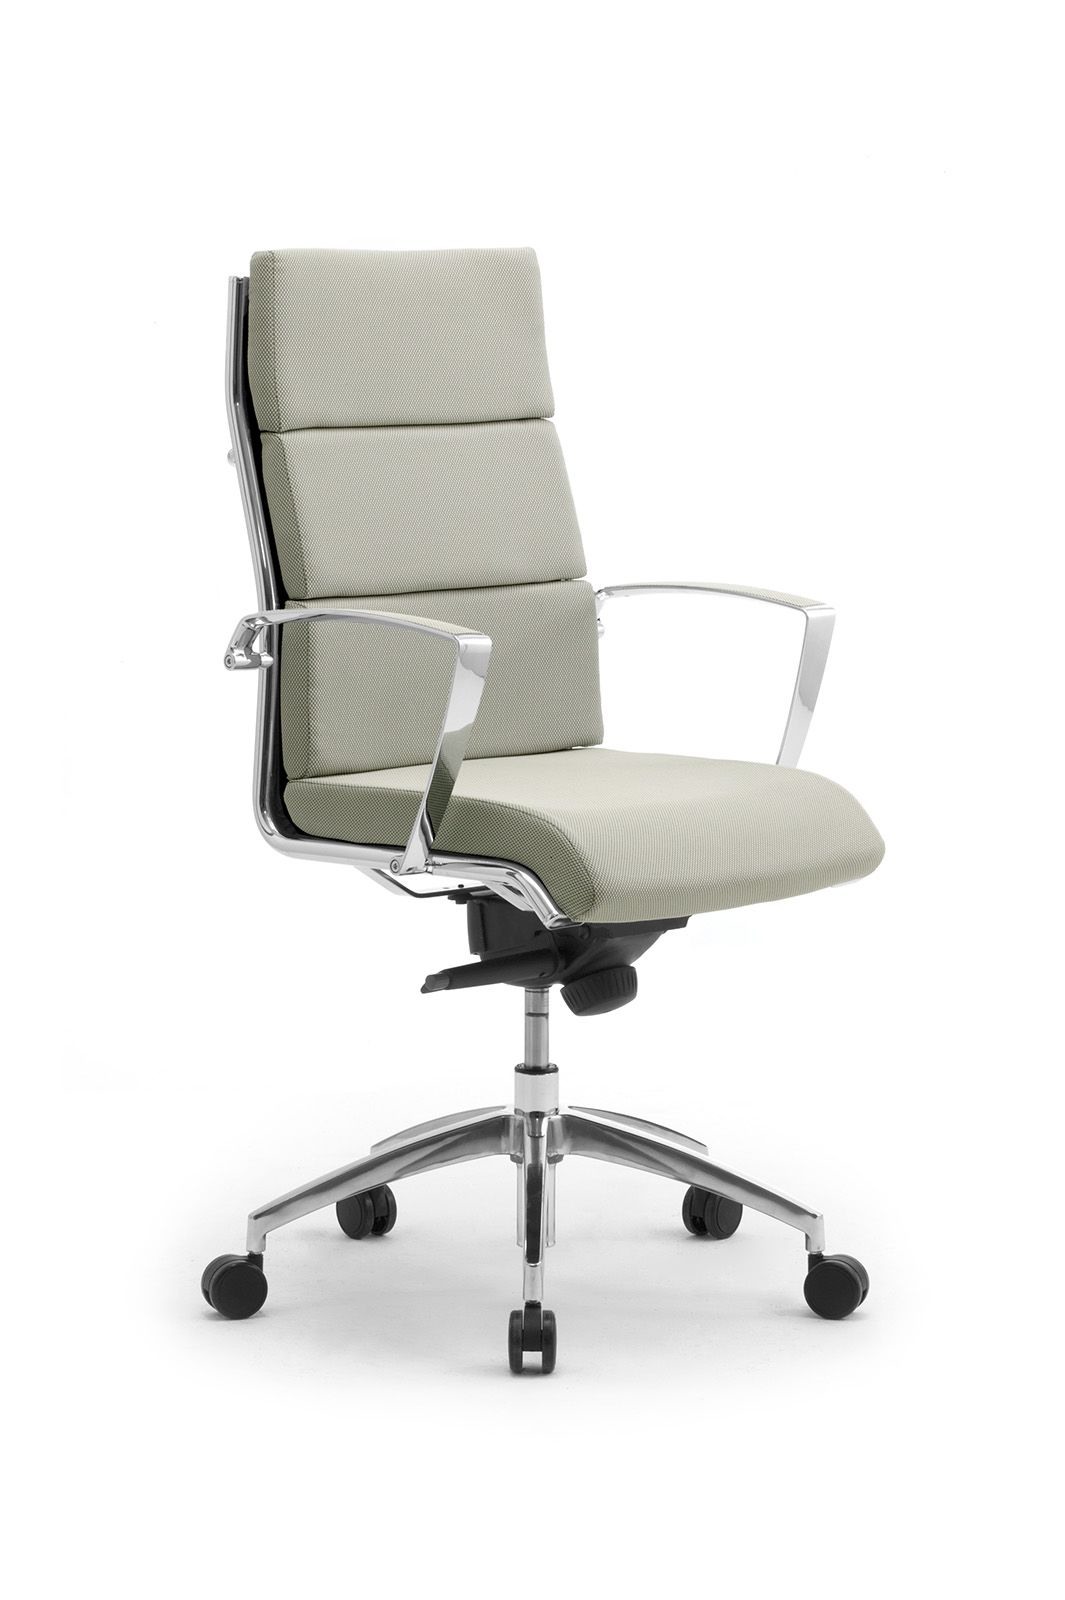 Origami CU high executive 70410, Presidential chaise de bureau, aluminium chromé